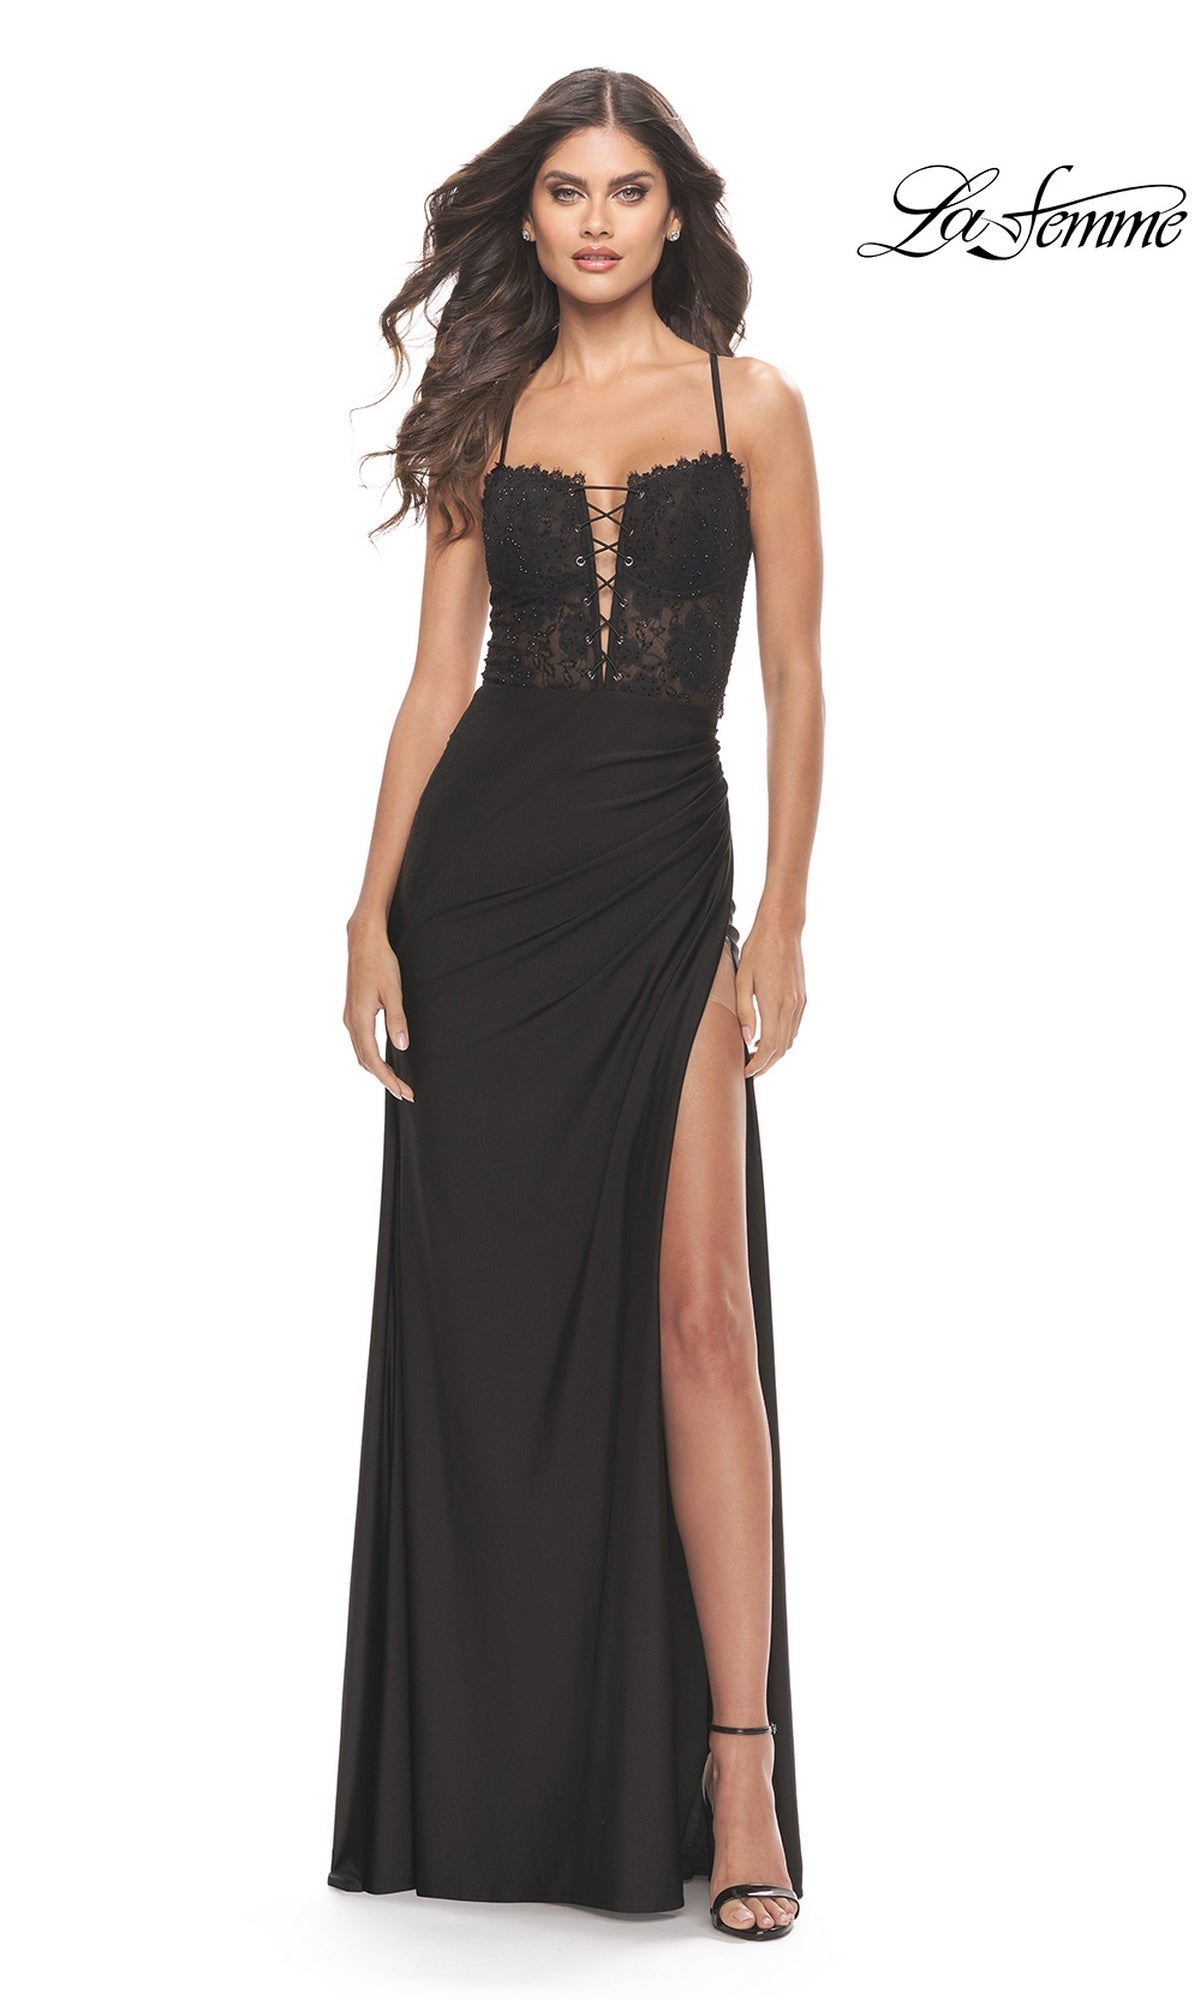 Black La Femme 31567 Formal Prom Dress